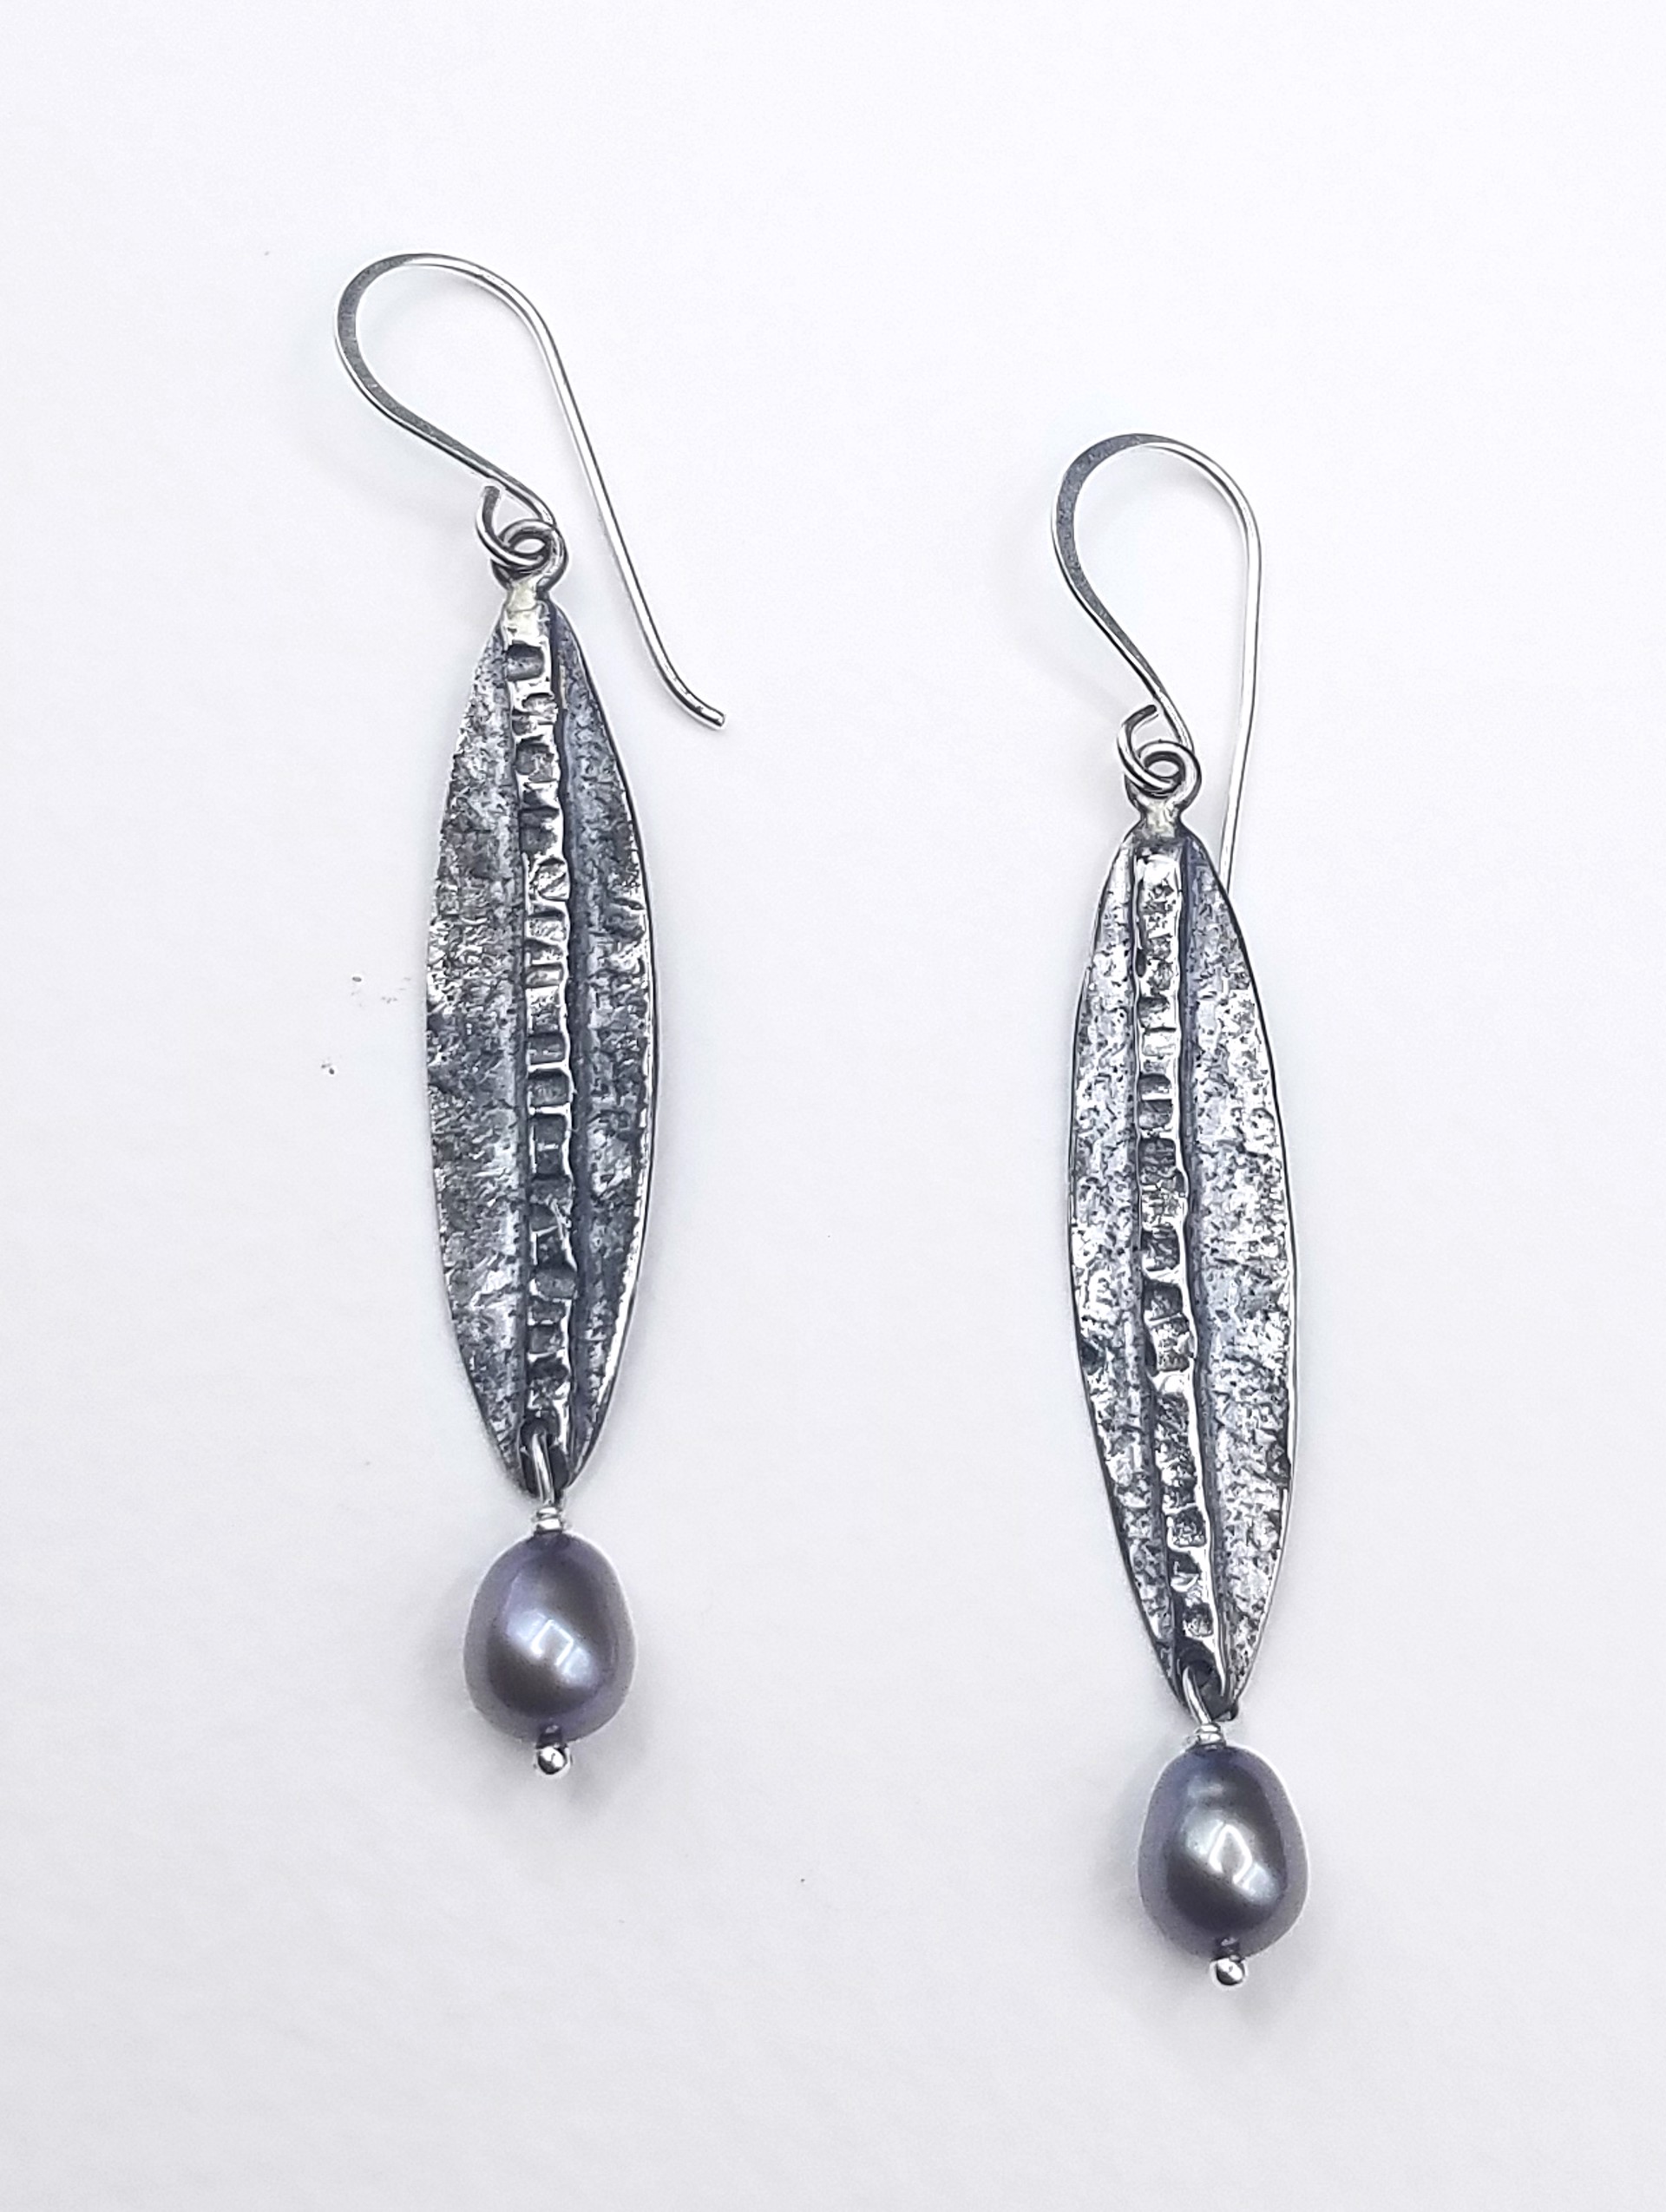 Elongated Drop Earrings with Freshwater Pearls by Anita Shuler